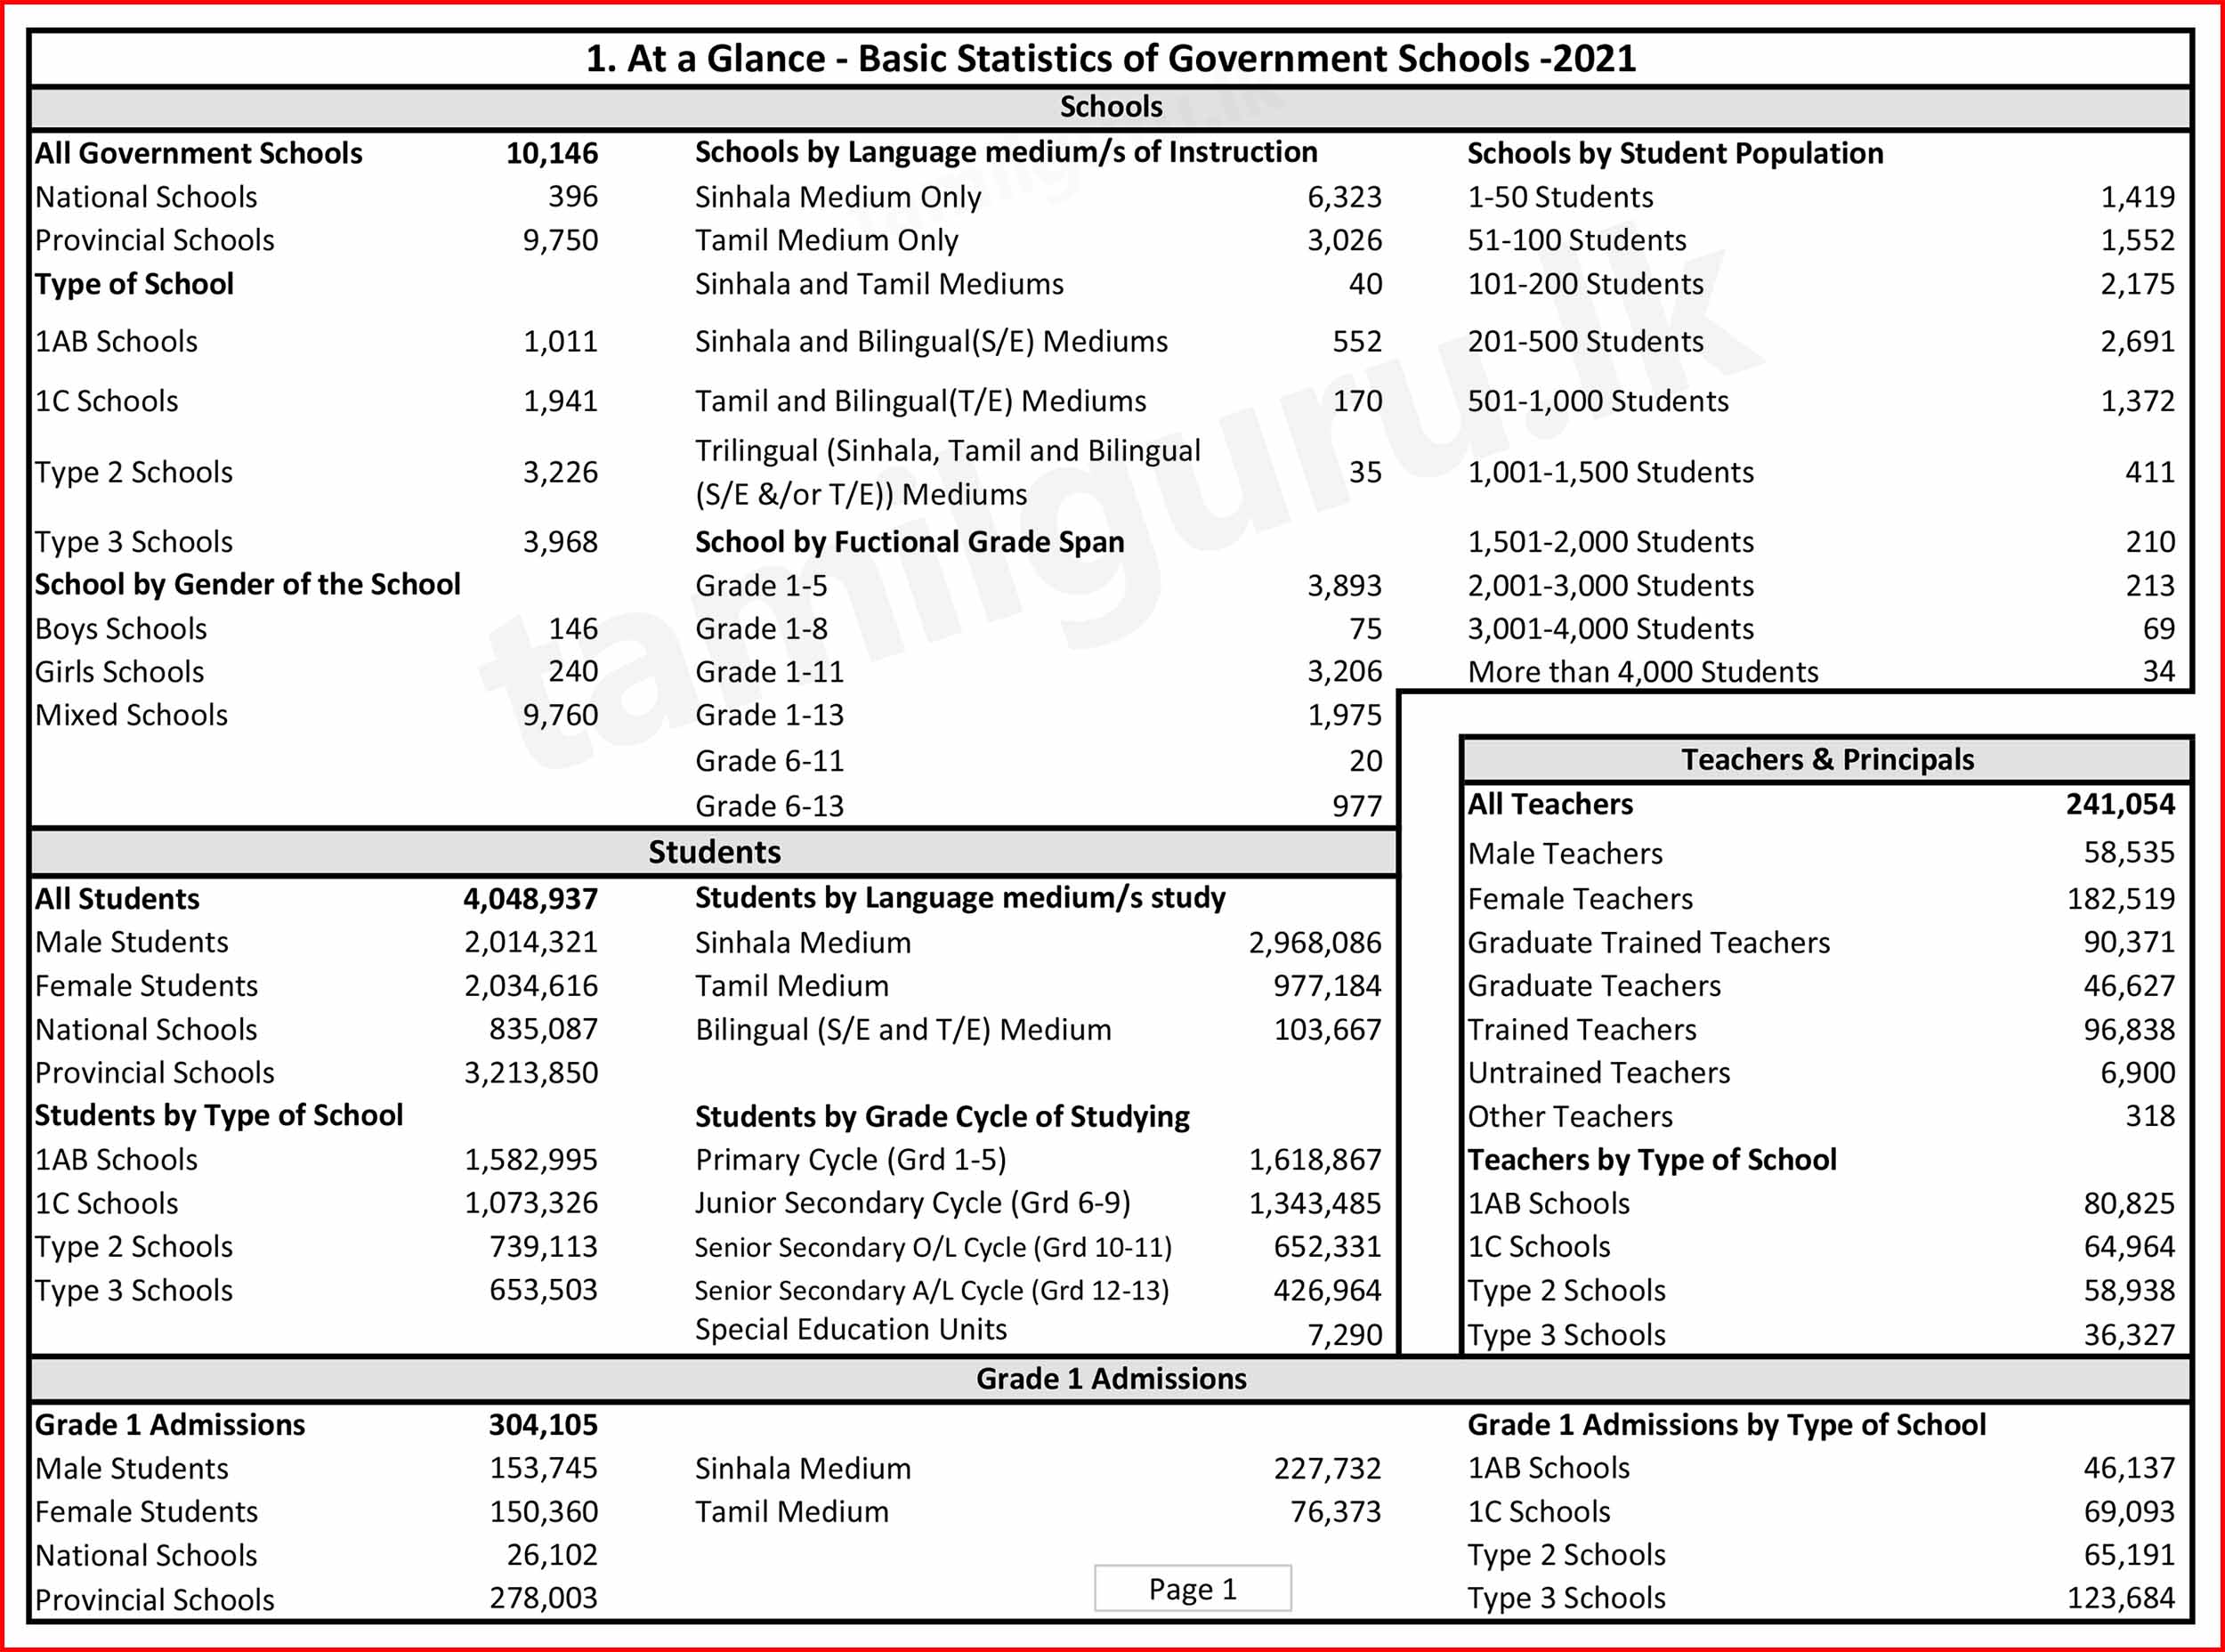 Basic Statistics of Government Schools - 2021